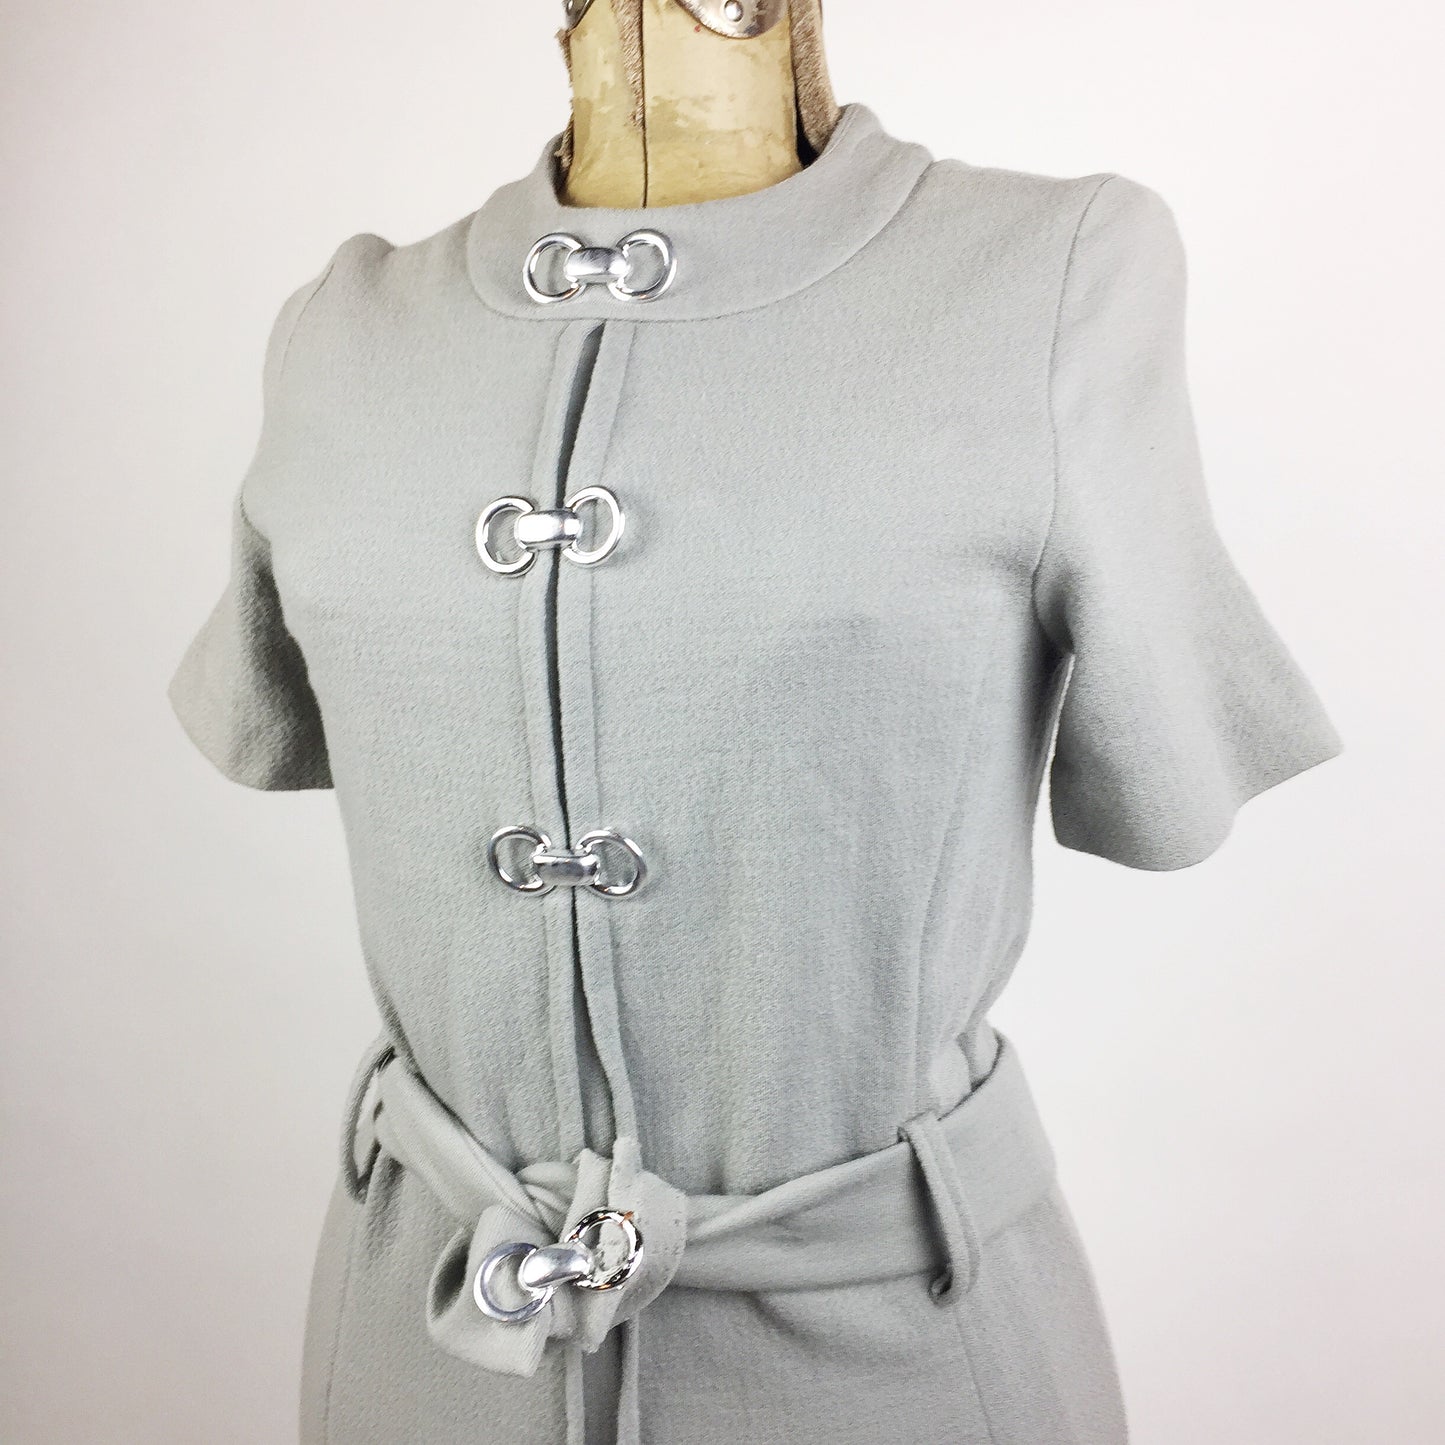 Vintage Mod Grey Silver Fasten Dress (M)